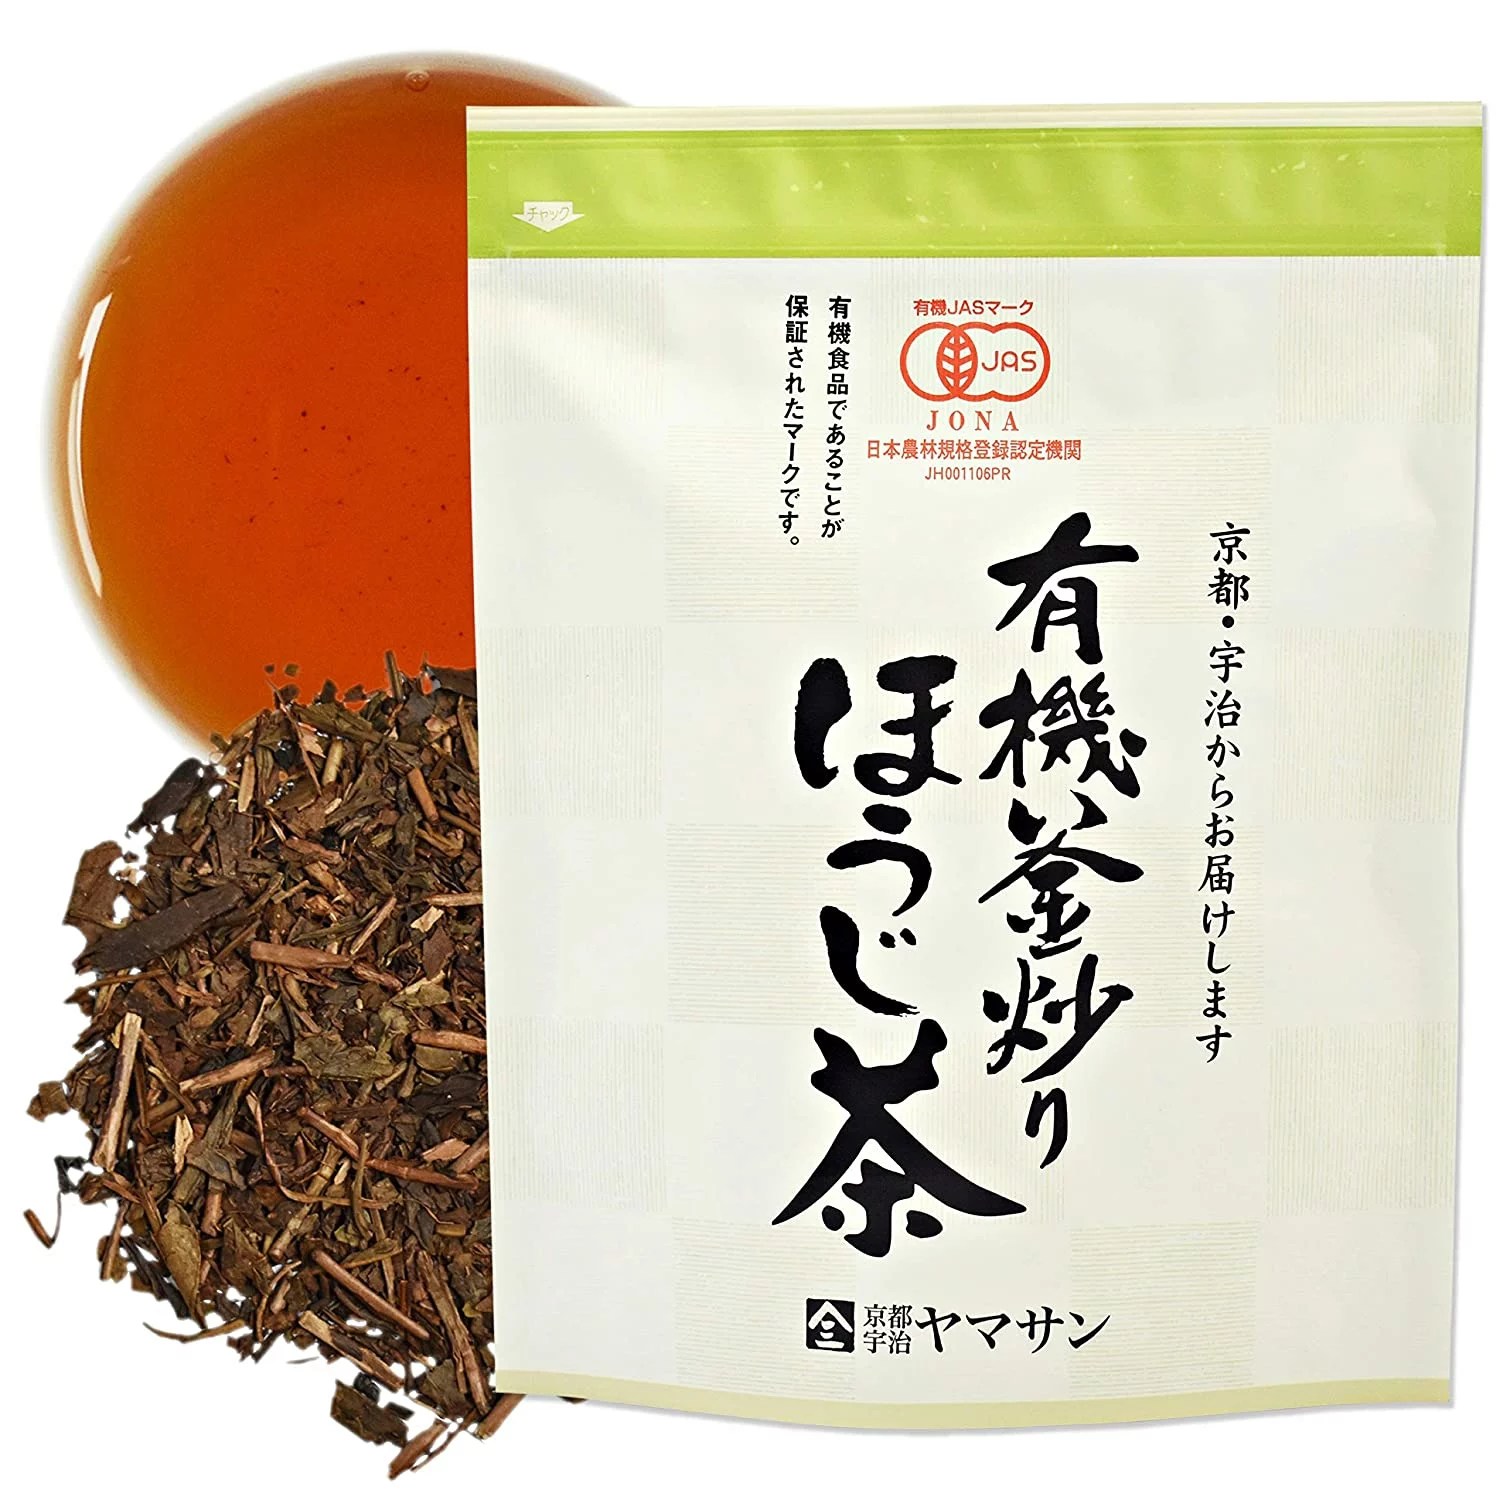 hojicha green tea pouch and tea mix